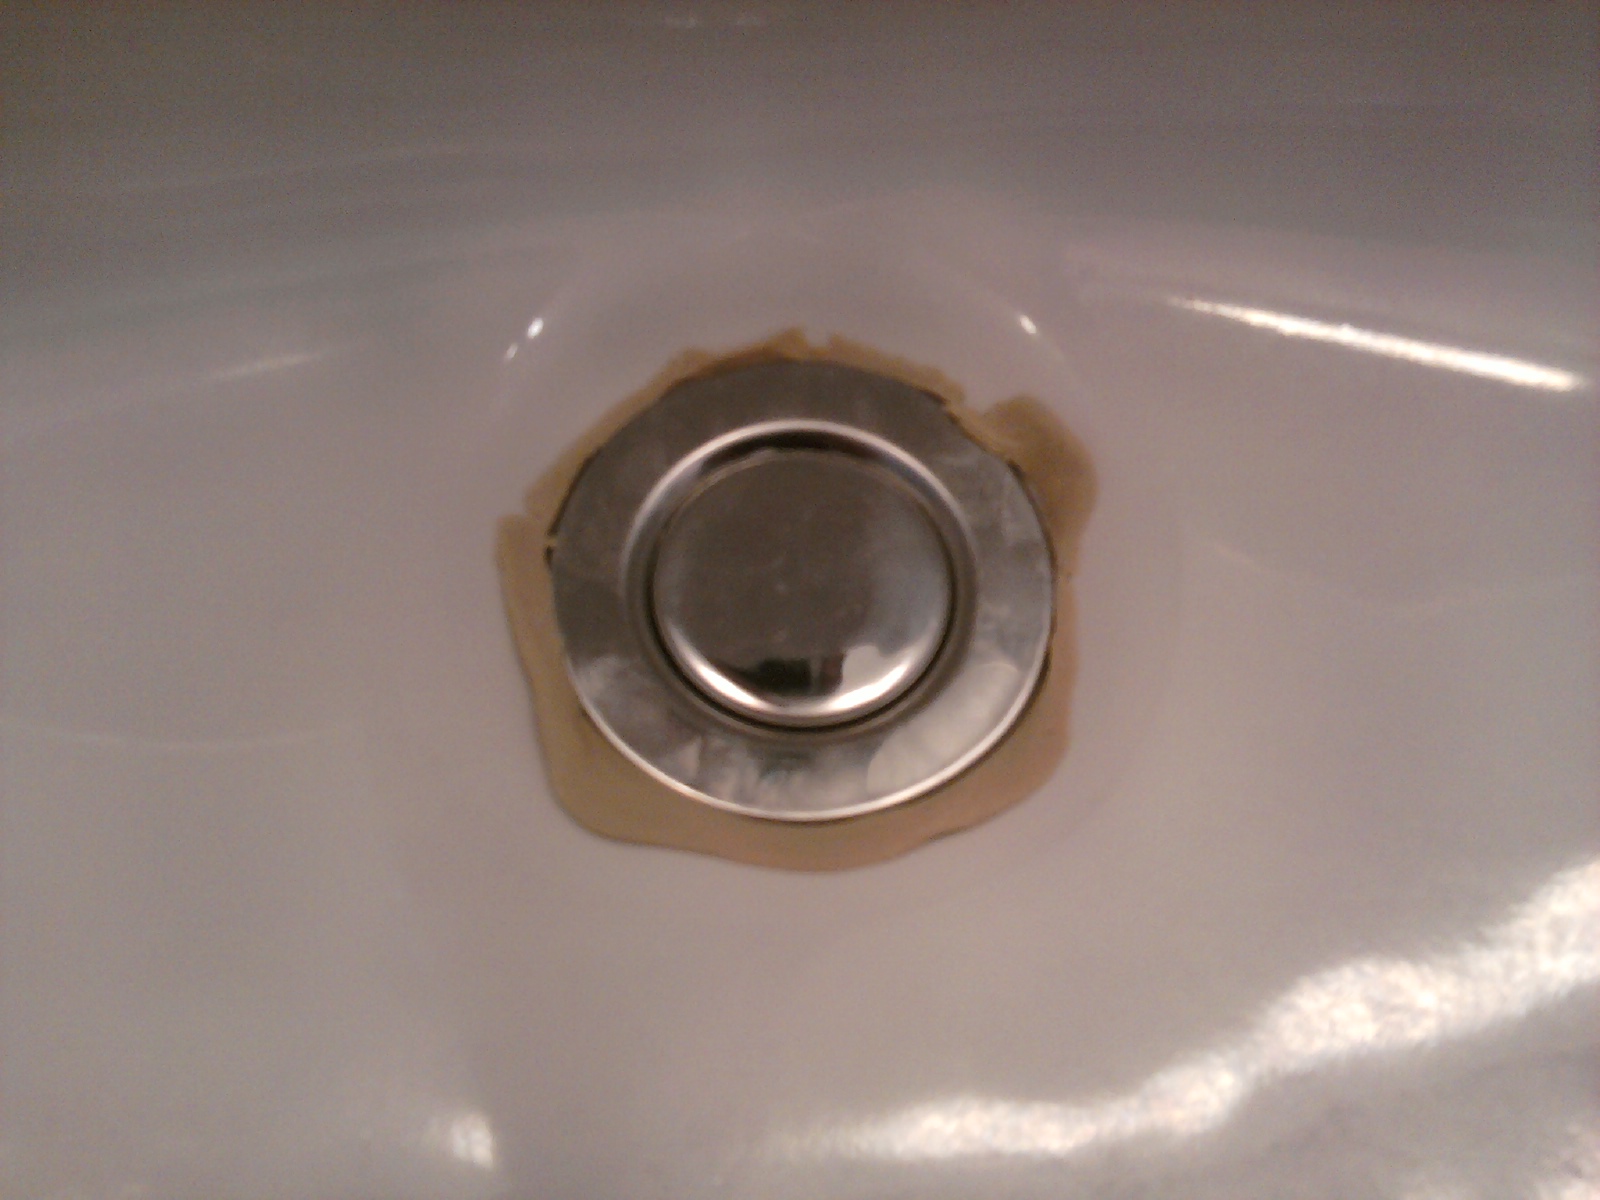 plumbers putty bathroom sink drain